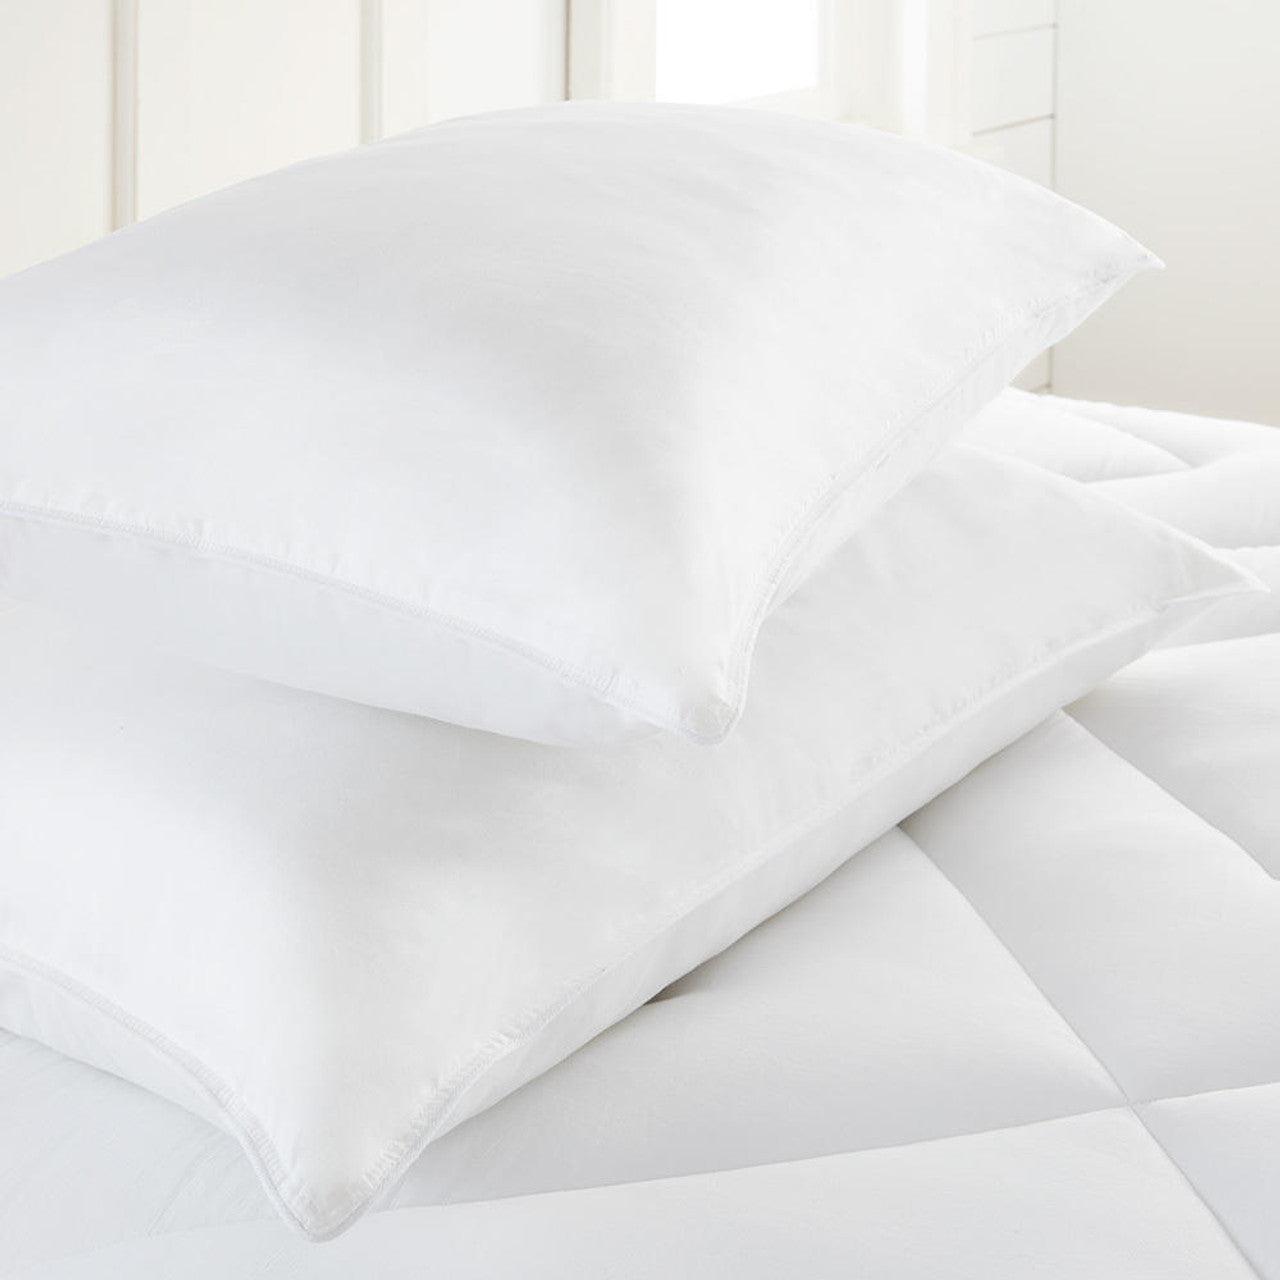 Down Alternative Medium Pillow 2 Pack for Back Sleepers (Hypoallergenic) - beddingbag.com